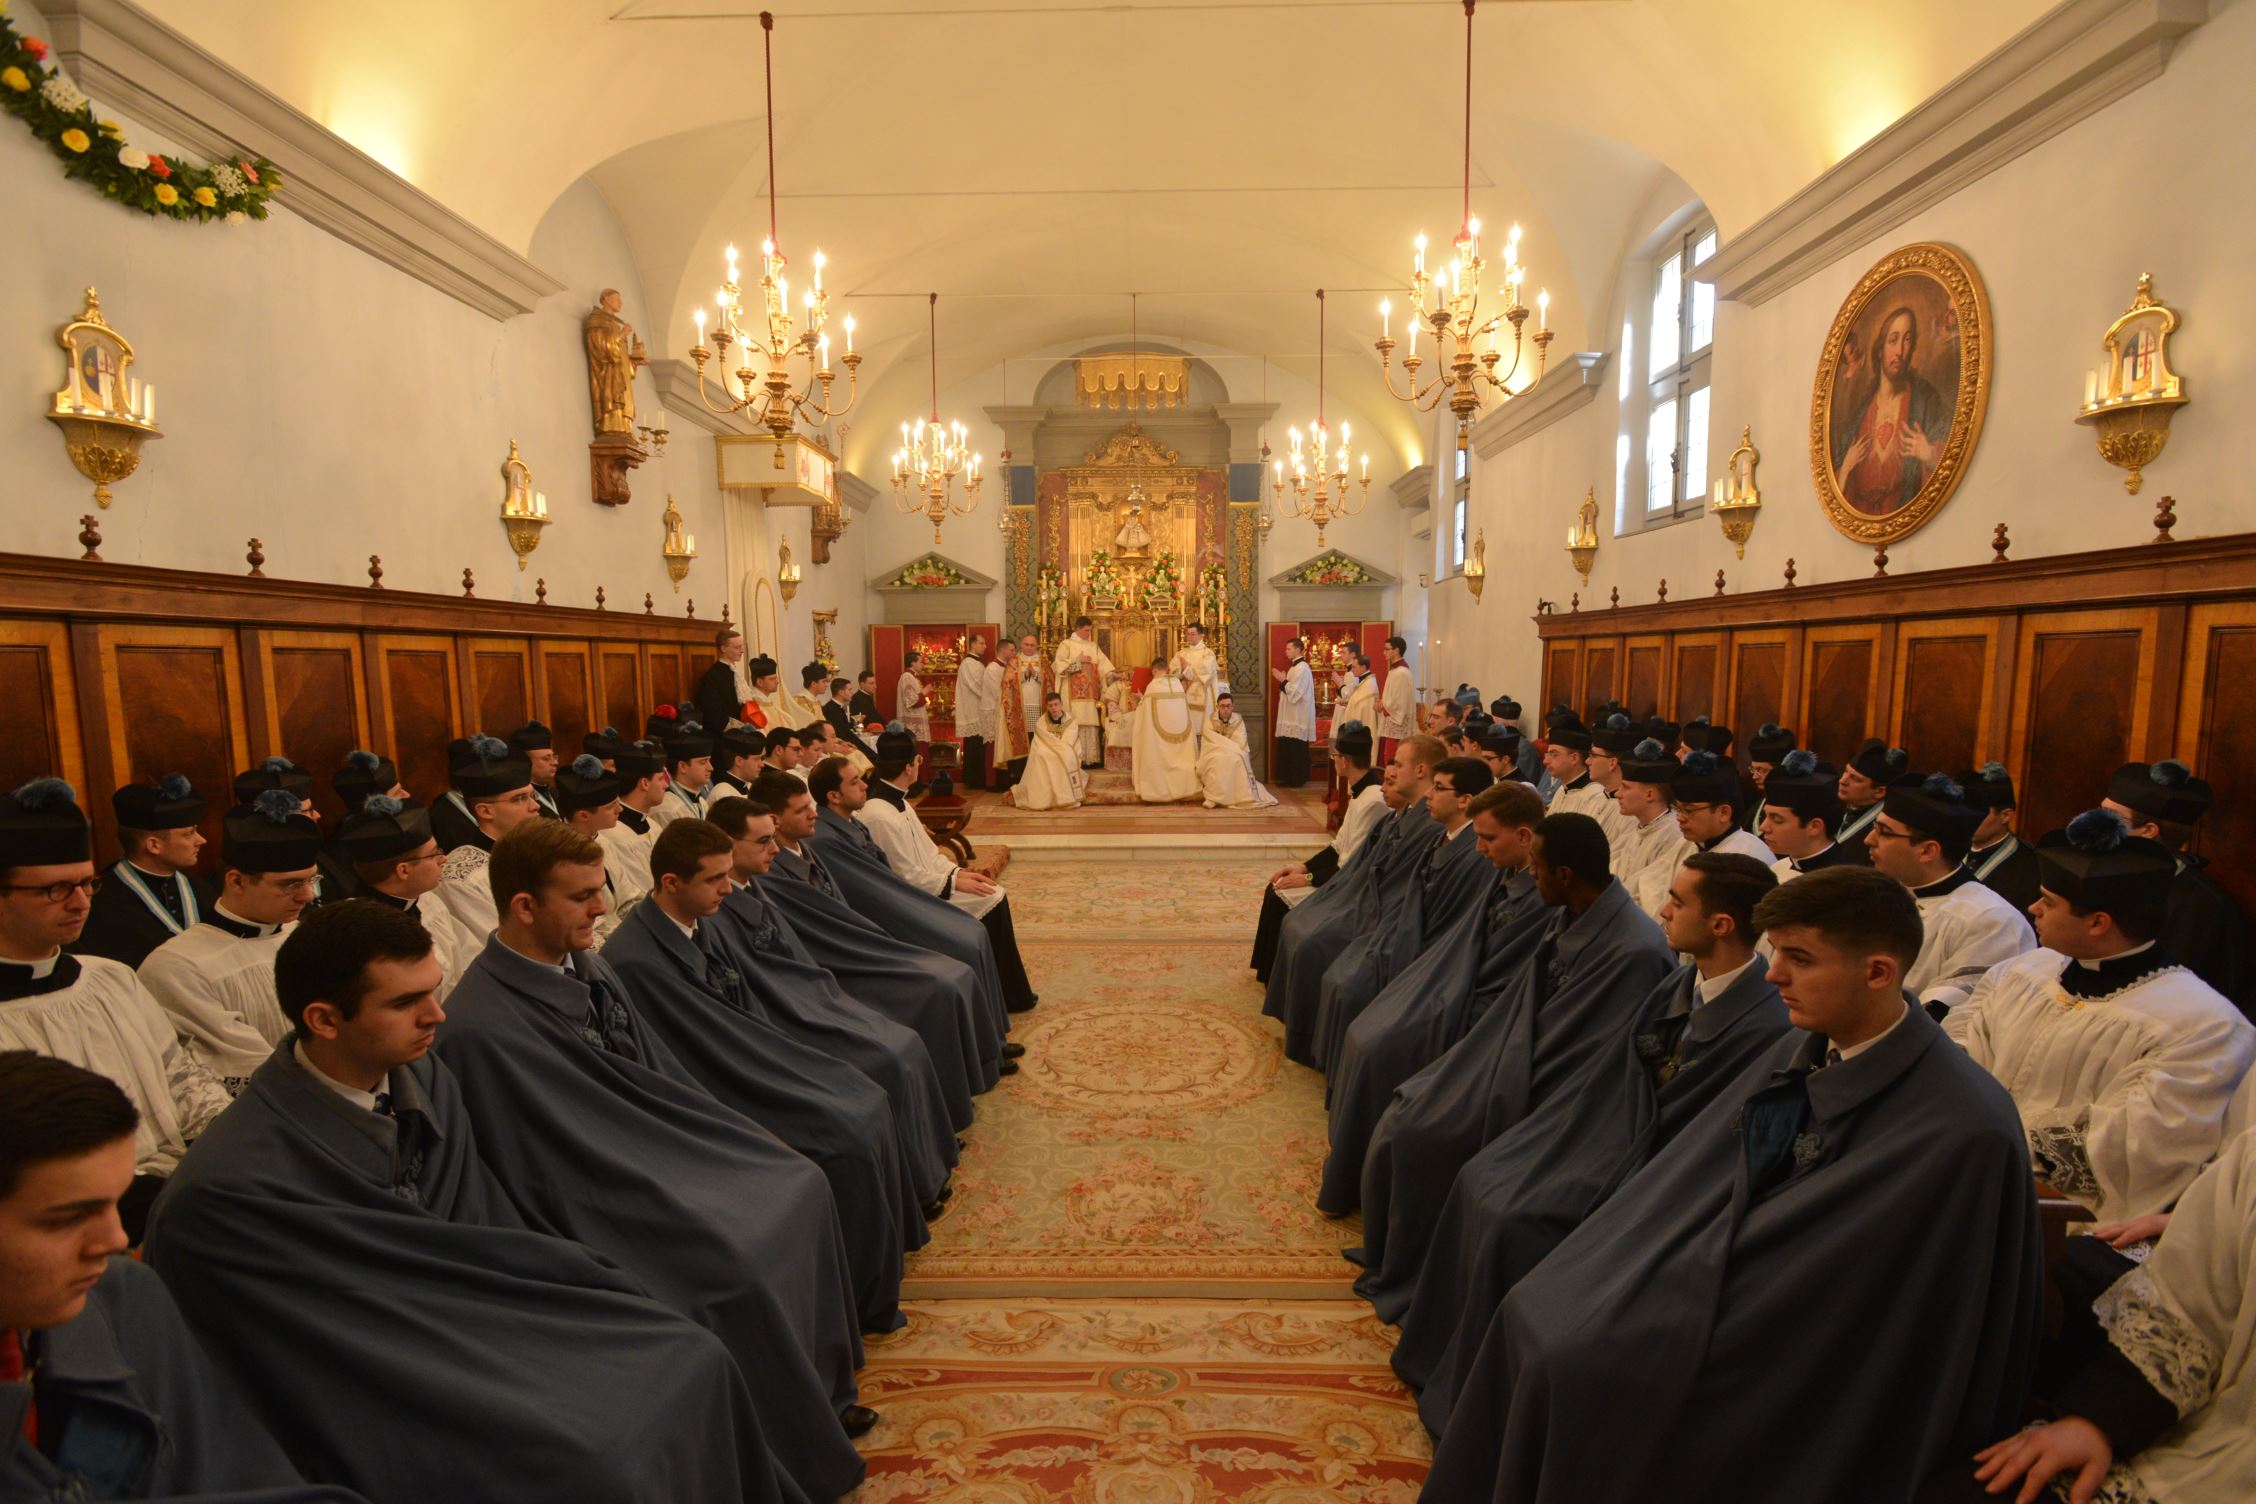 Restore Seminarians